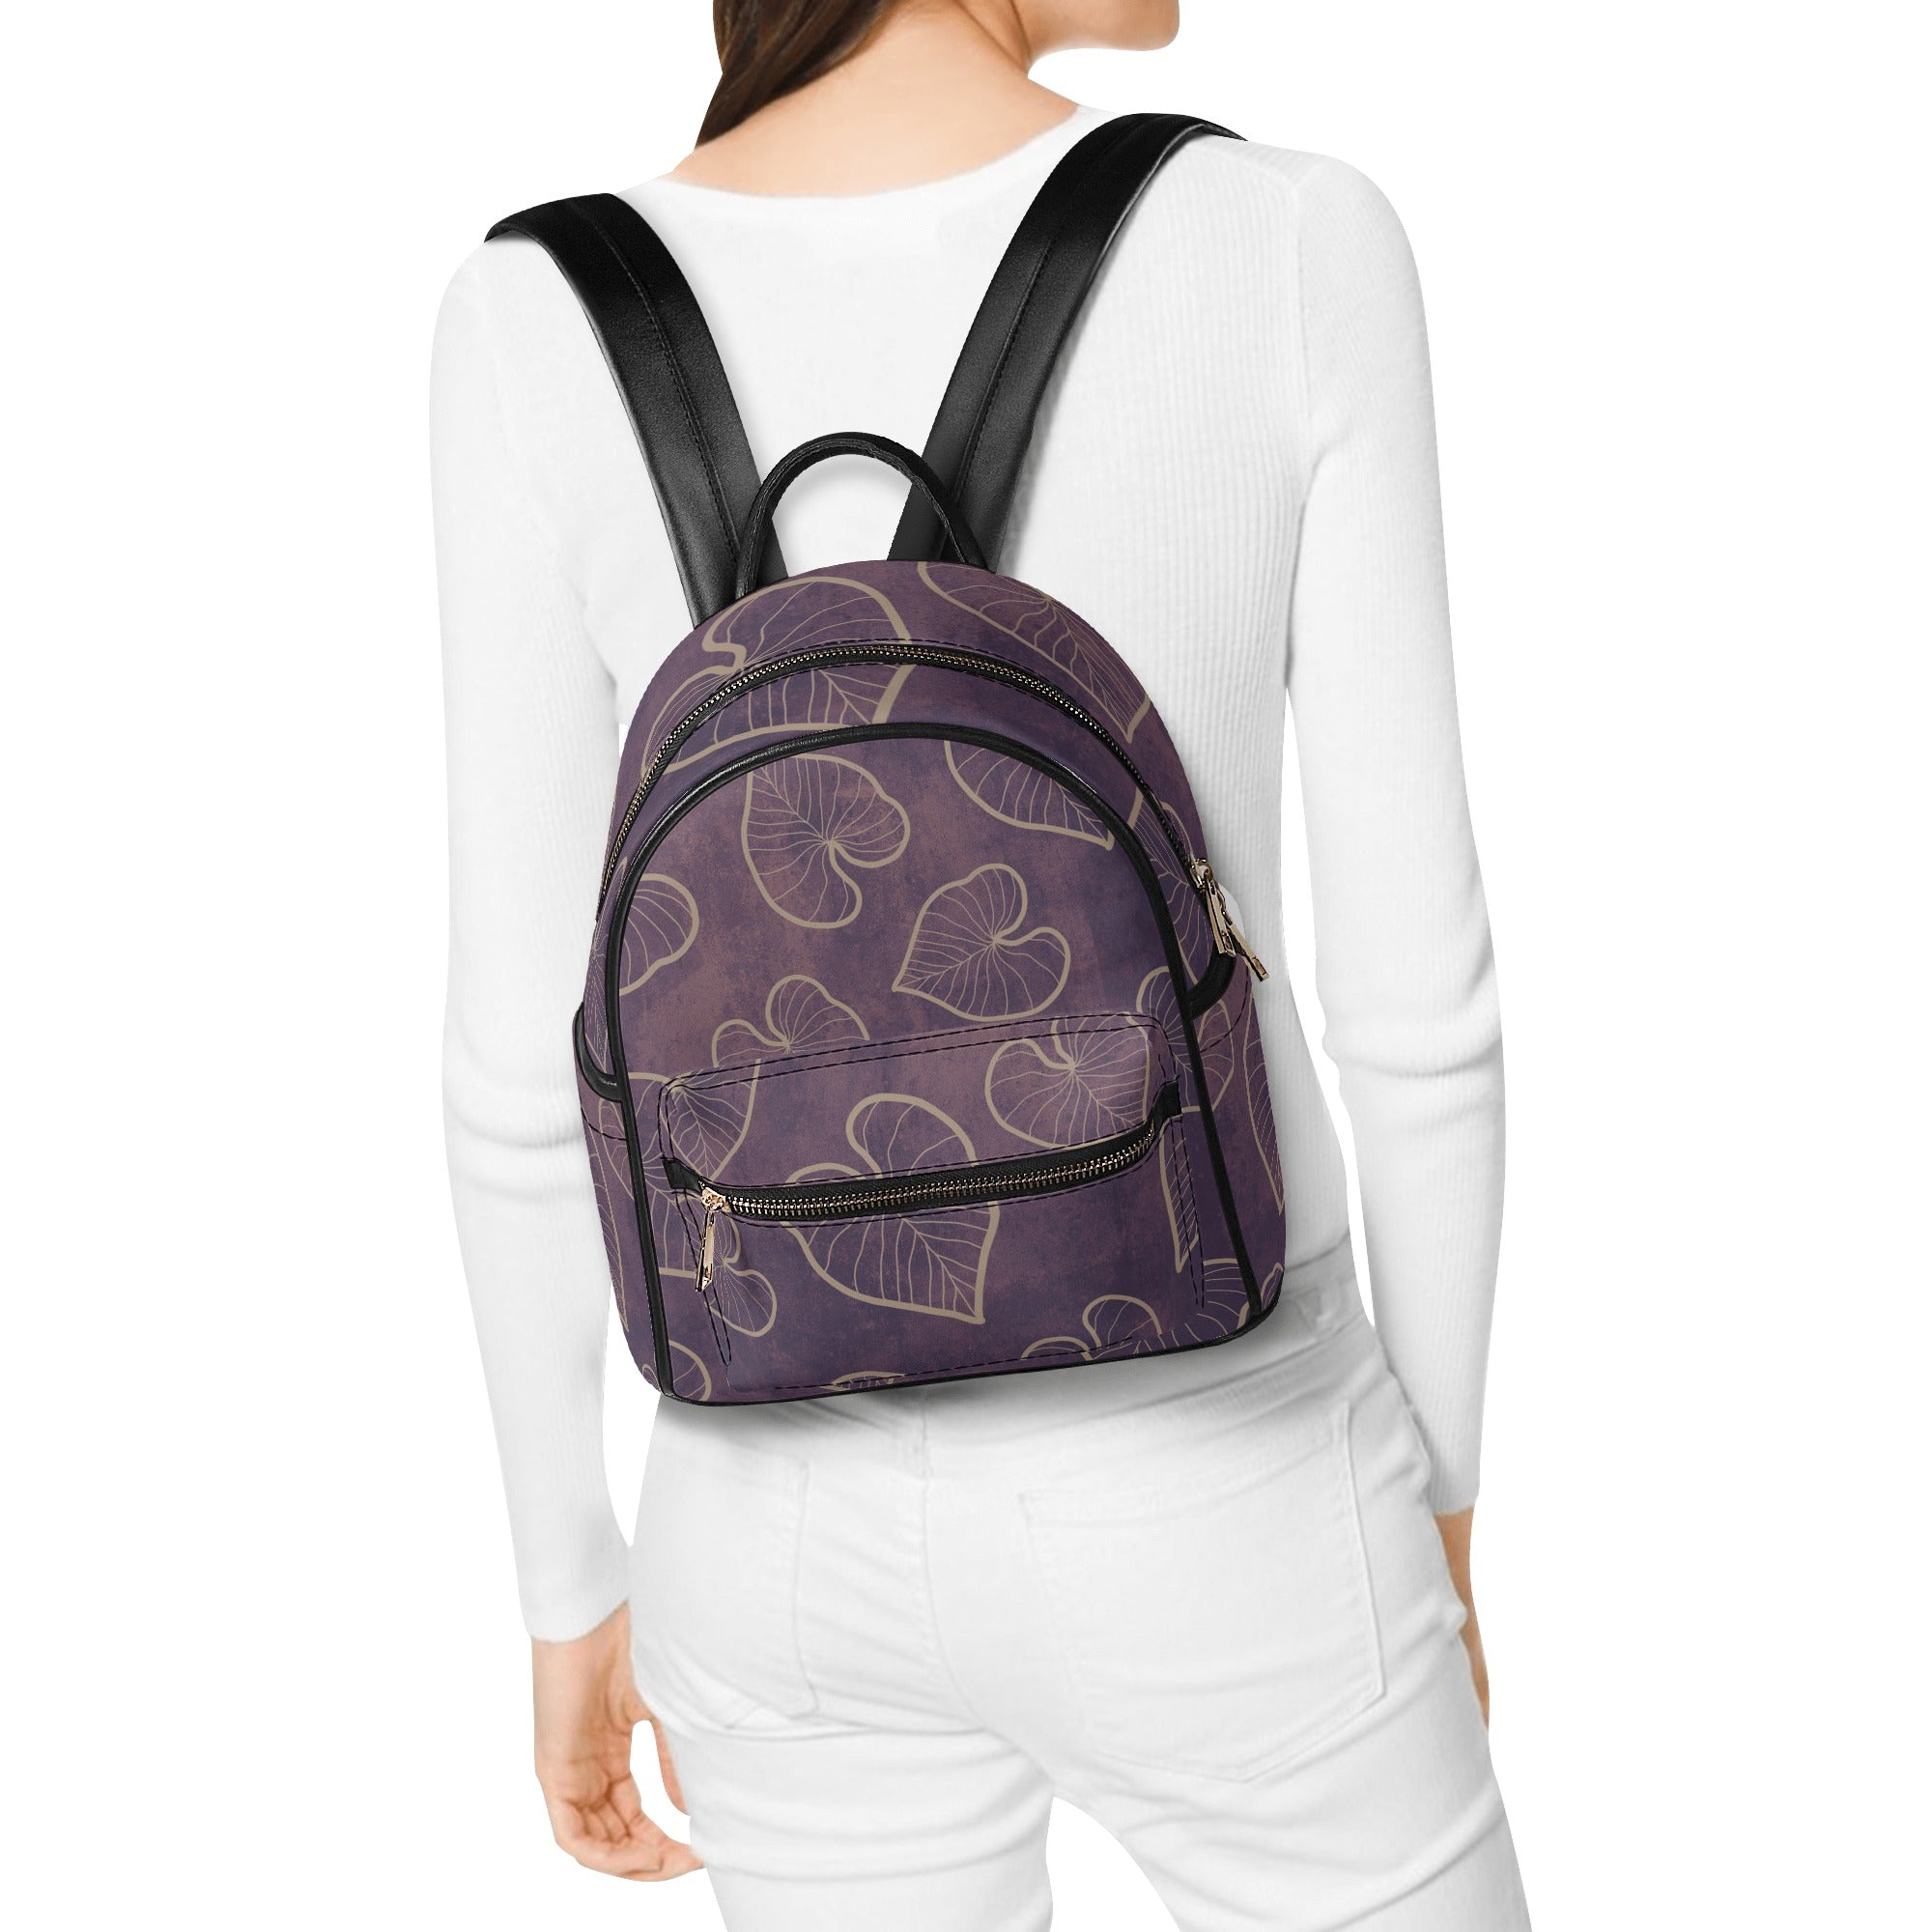 Kalo Taro Leaf Hawaiian Print Mini Backpack - Faux Leather, Purple Watercolor Design